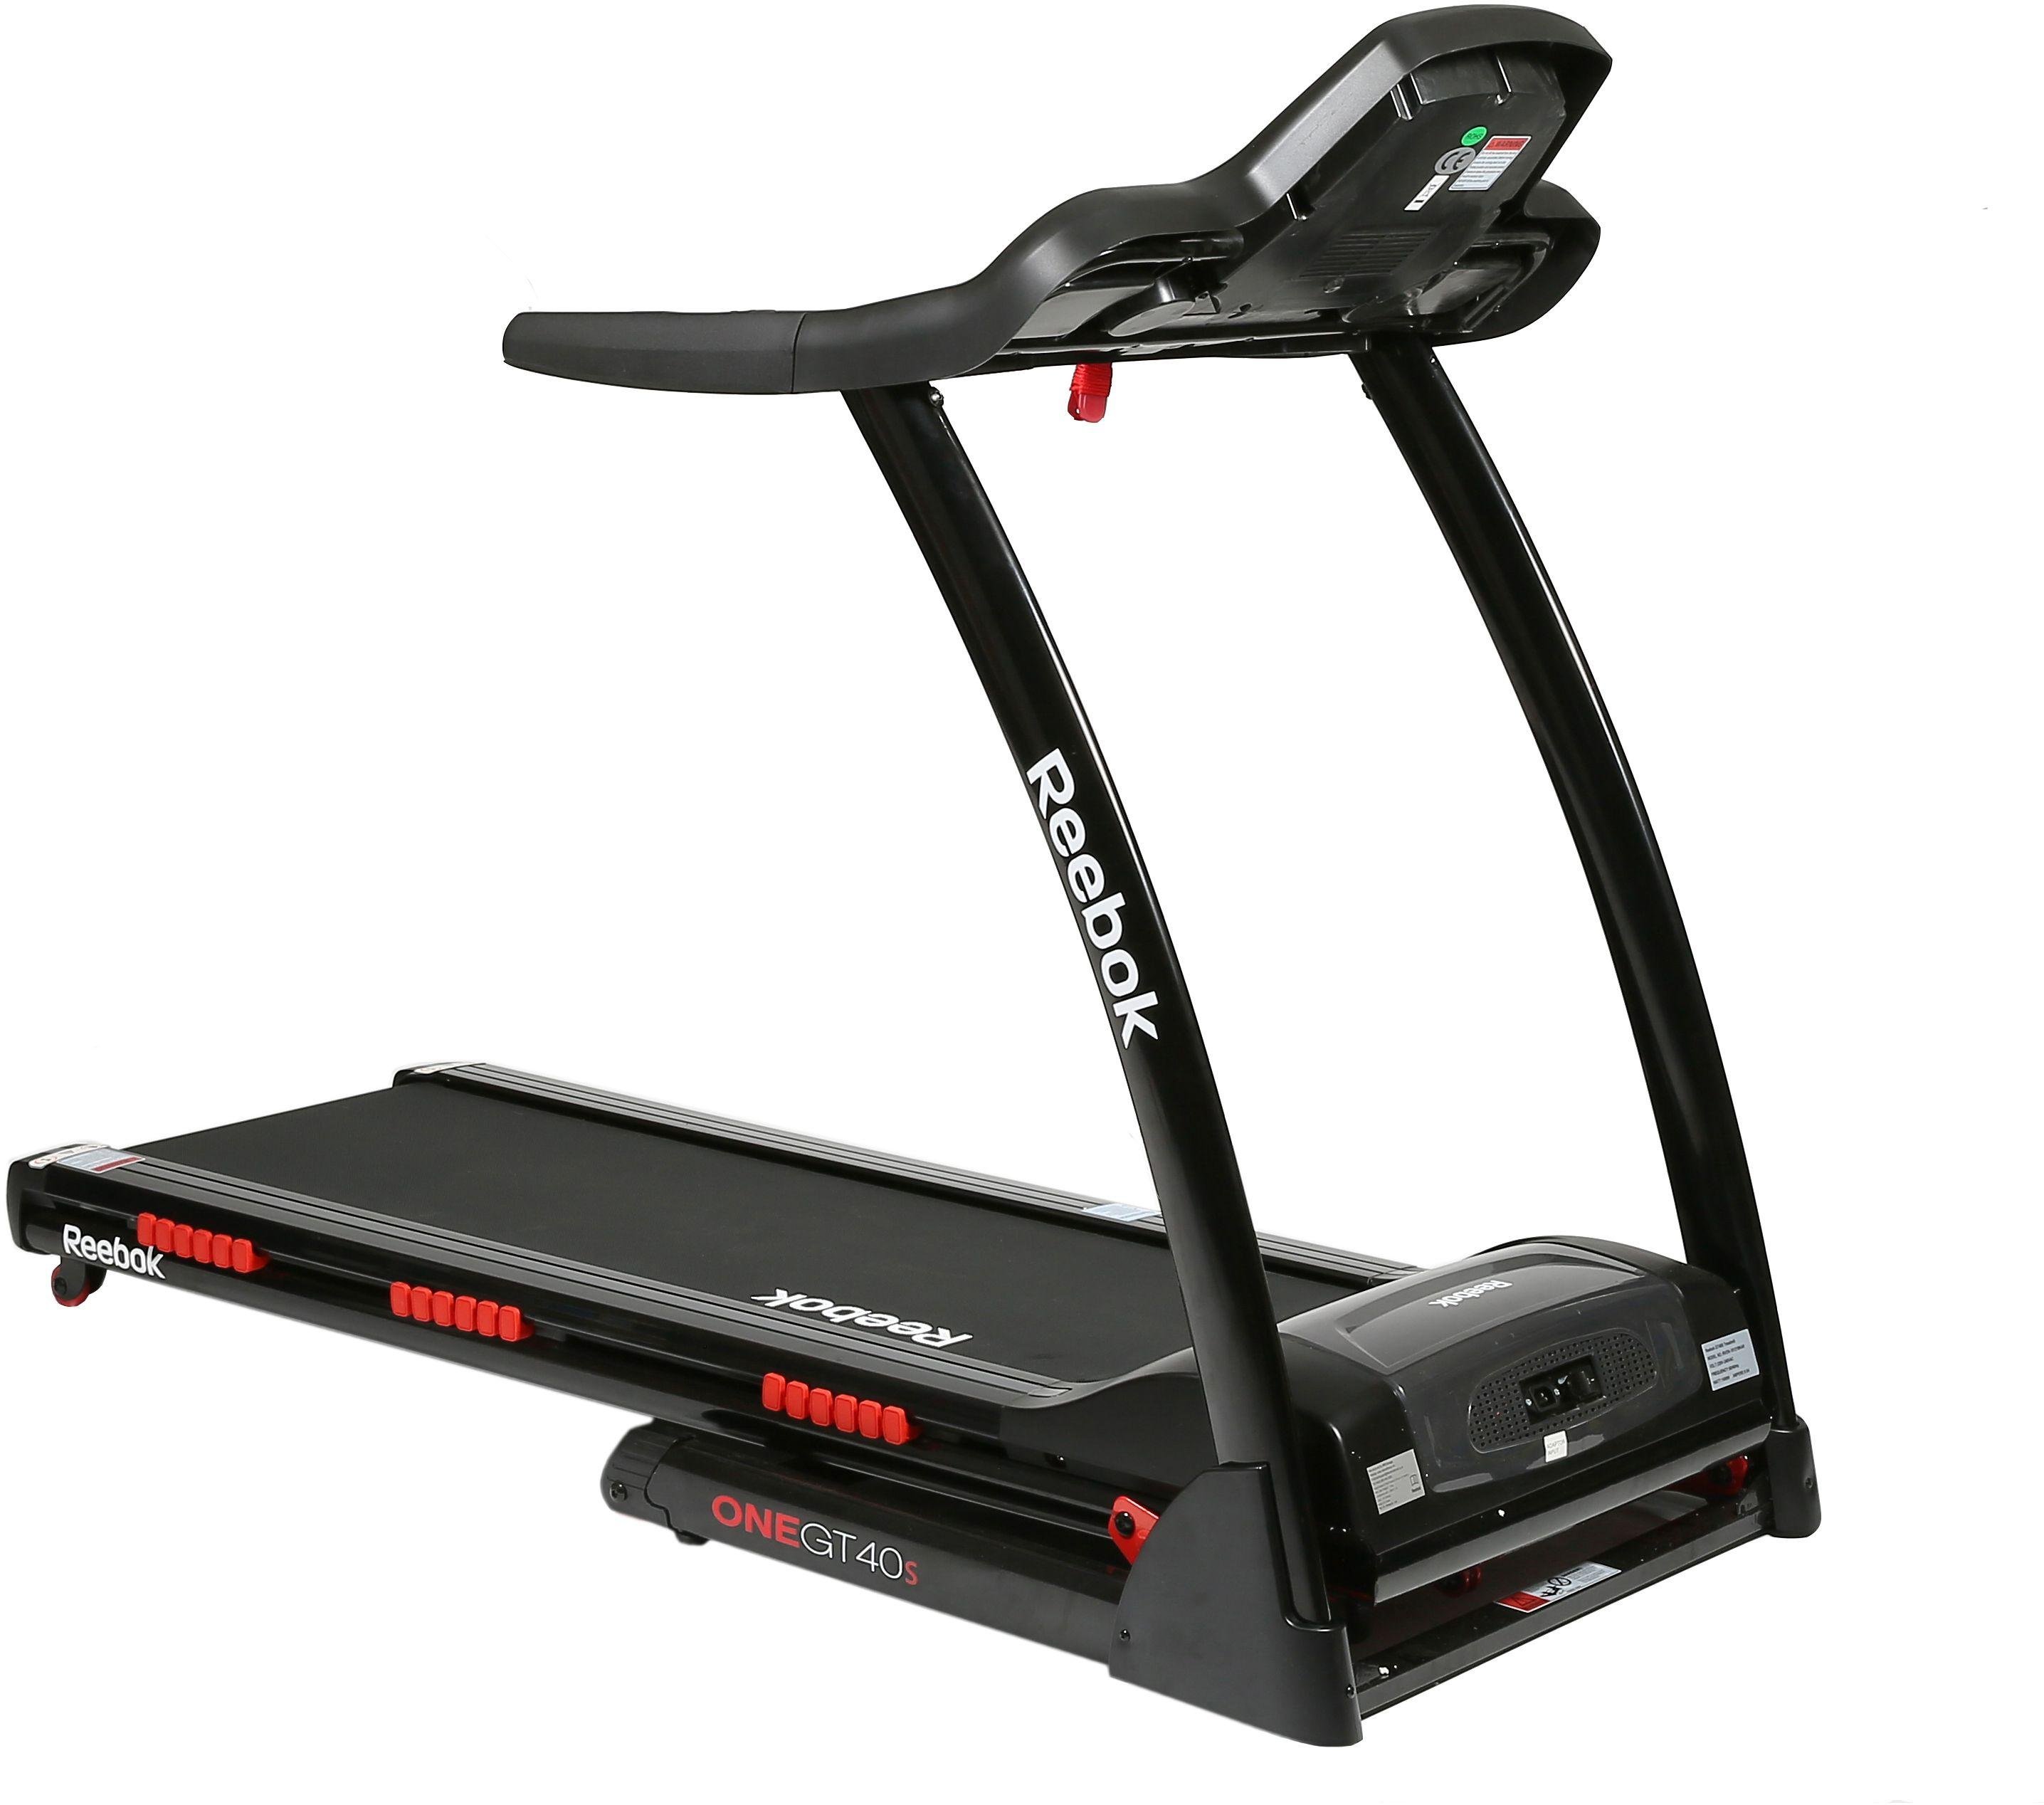 reebok one gt40s treadmill video - 51 